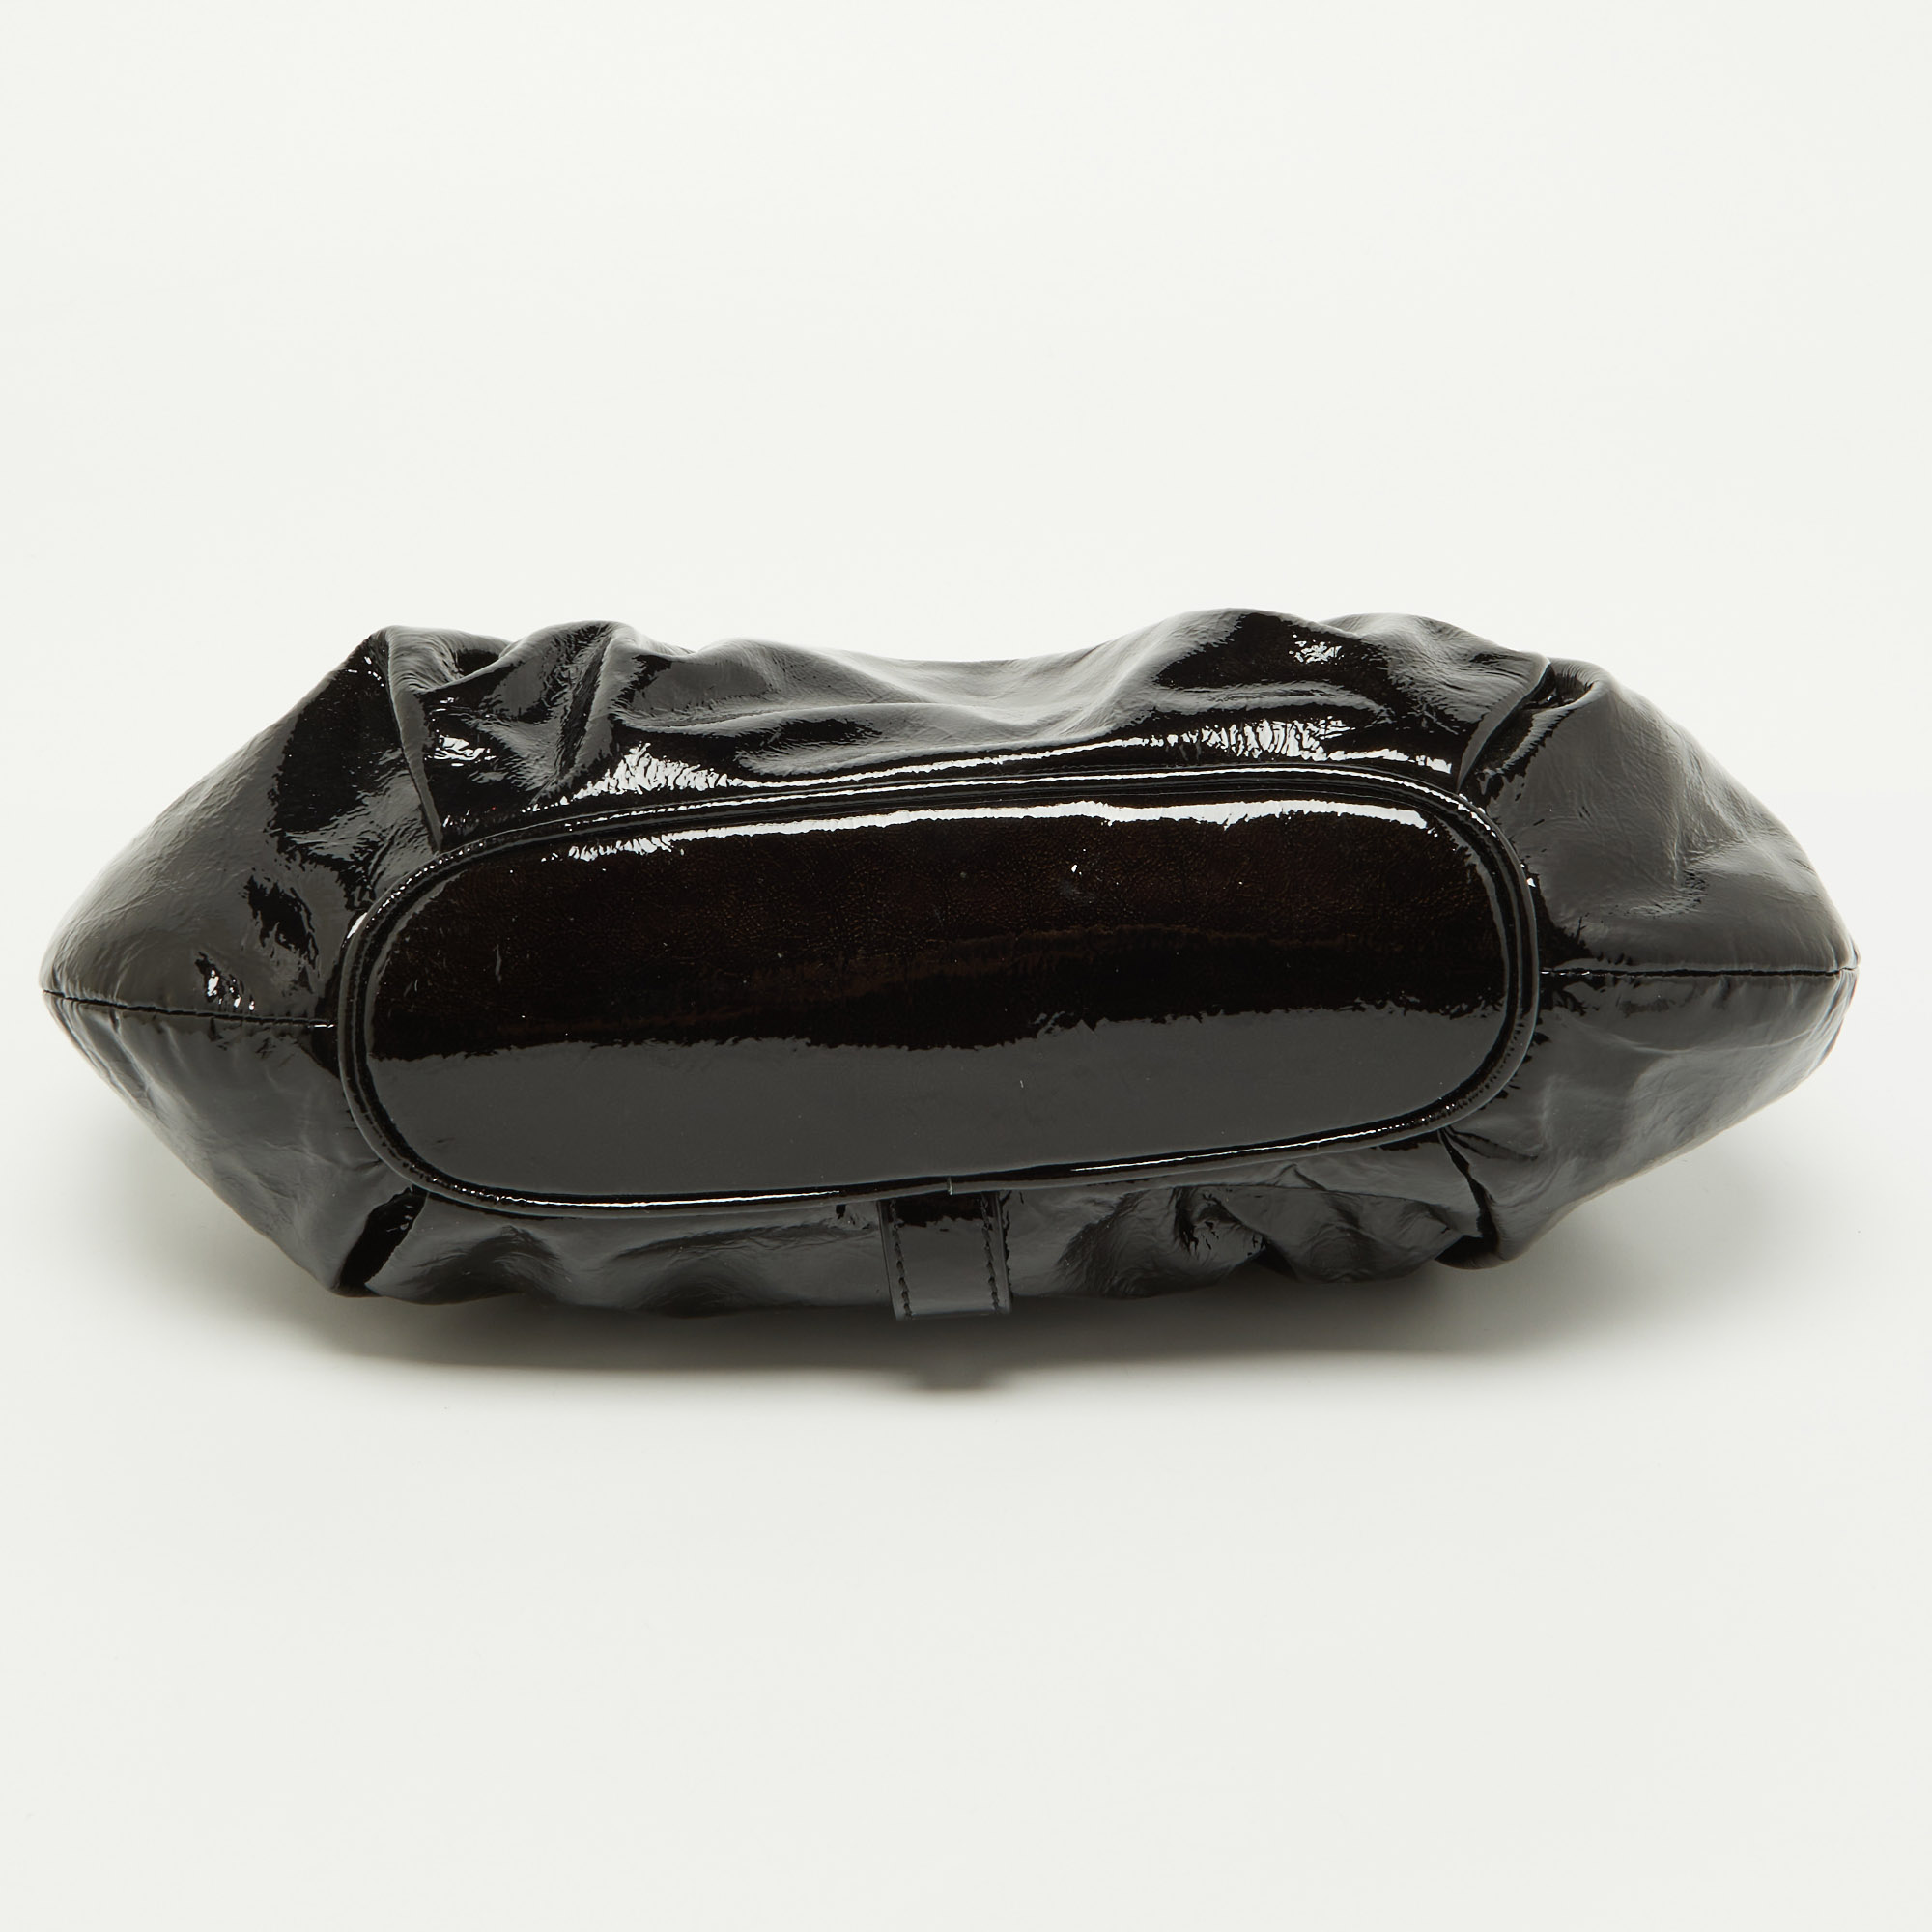 Moschino Black Patent Leather Clutch